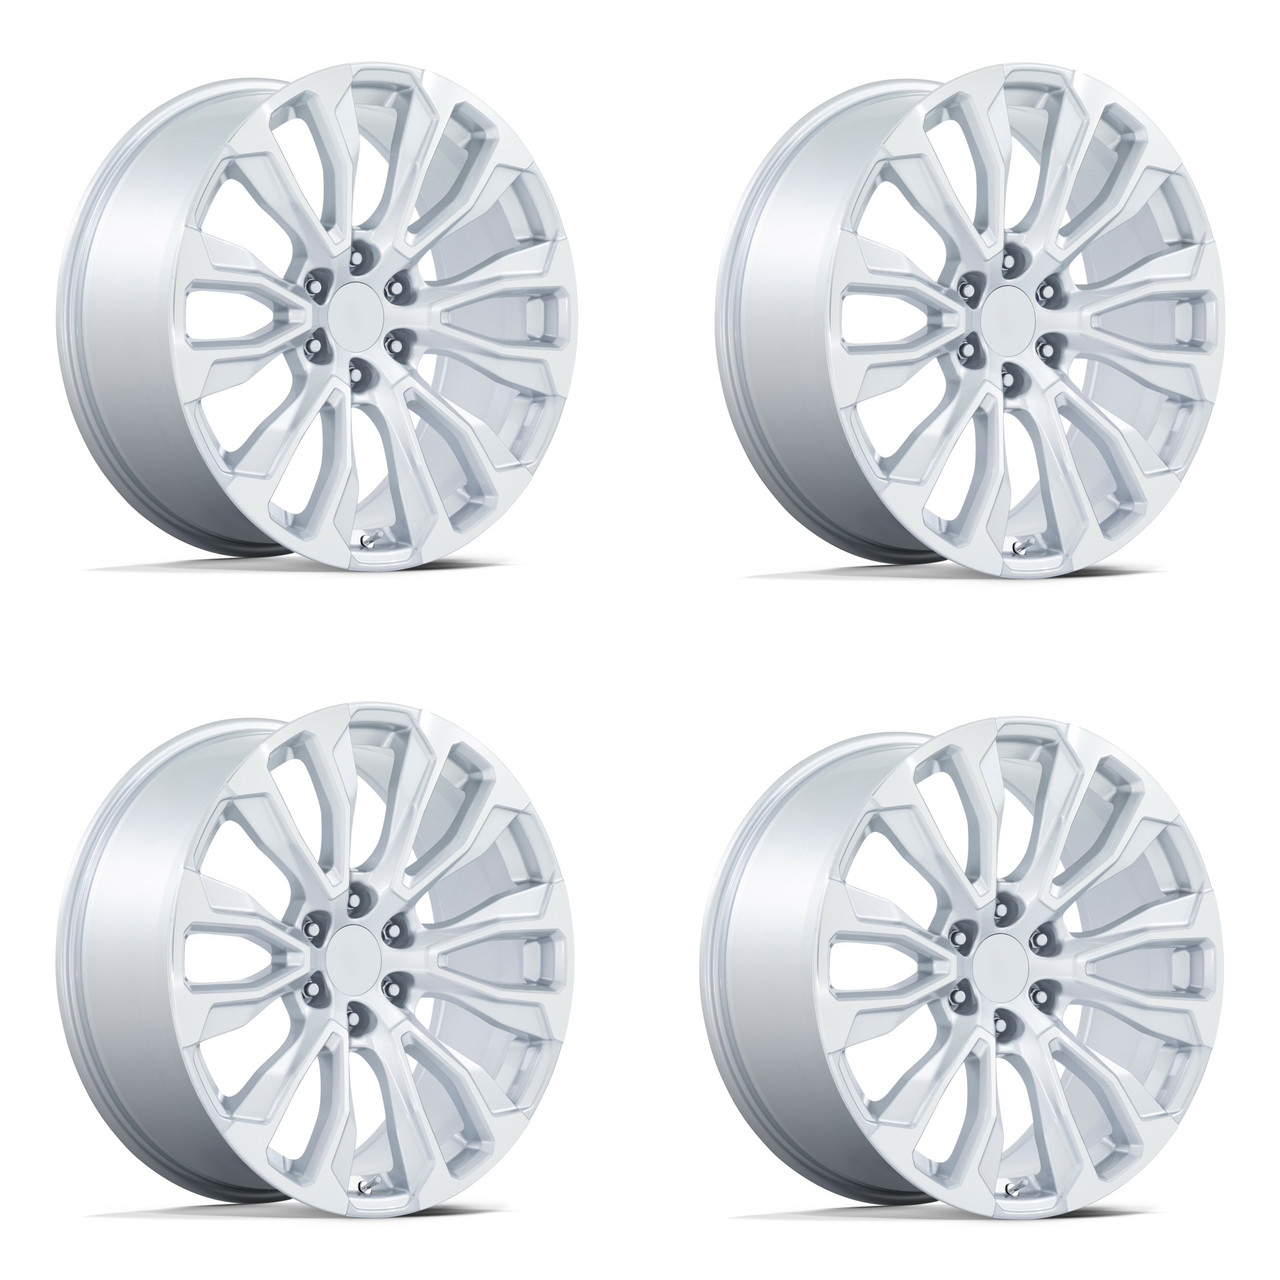 Set 4 Performance Replicas PR211 22x9 6x5.5 Chrome Wheels 22" 28mm Rims